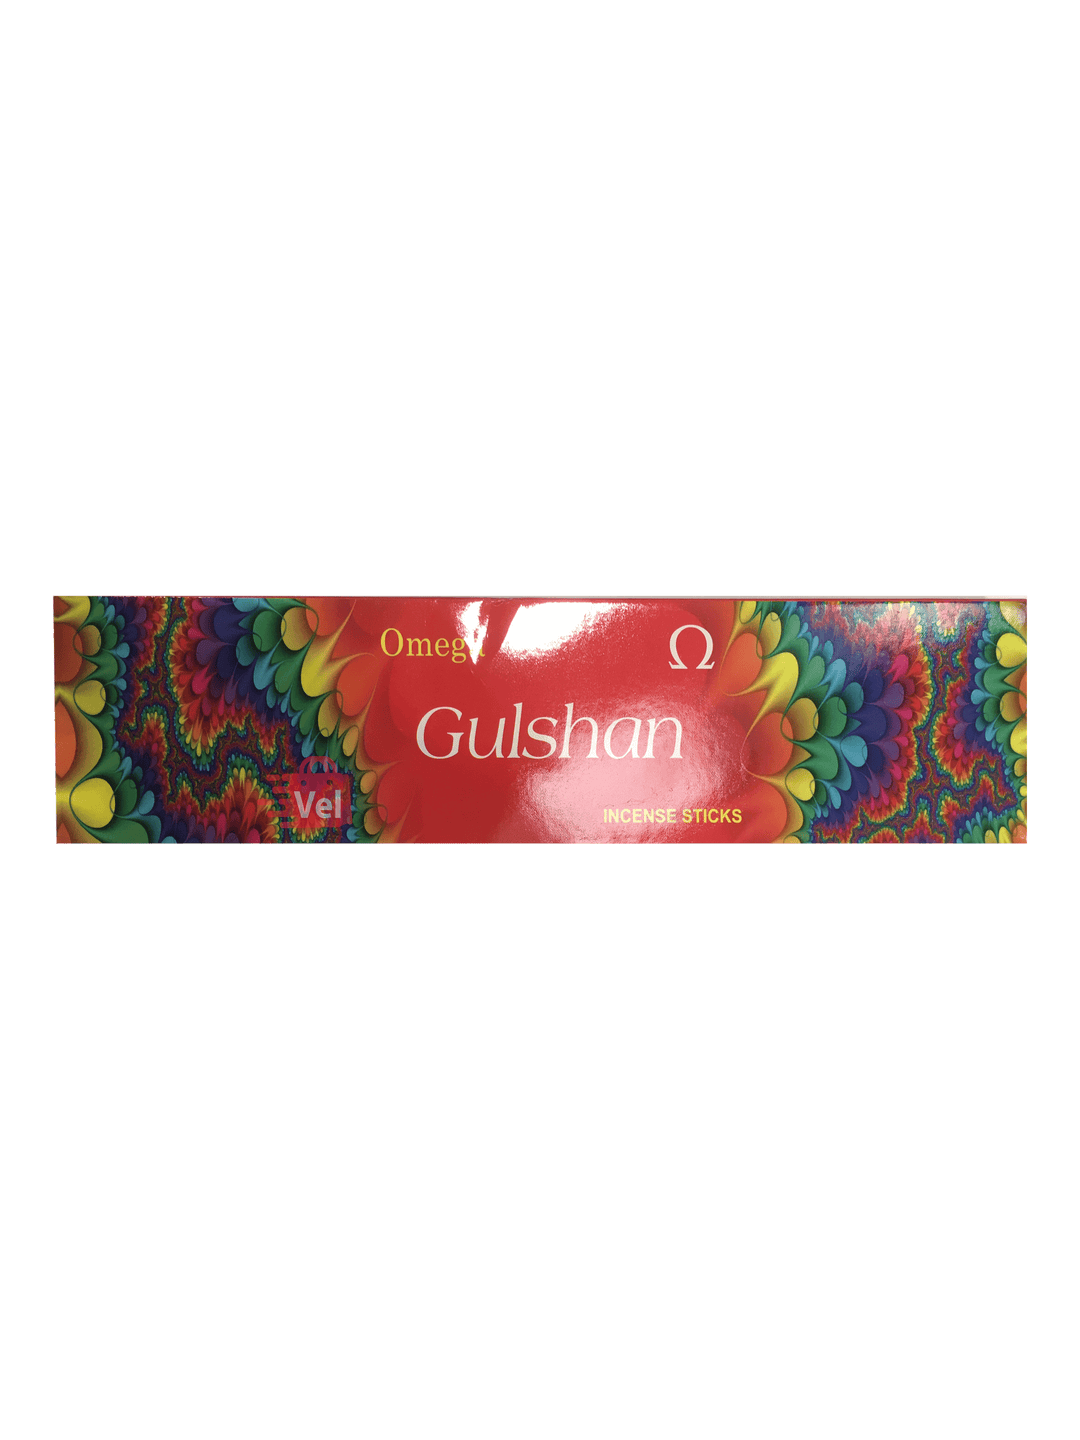 Omega Gulshan Incense Sticks